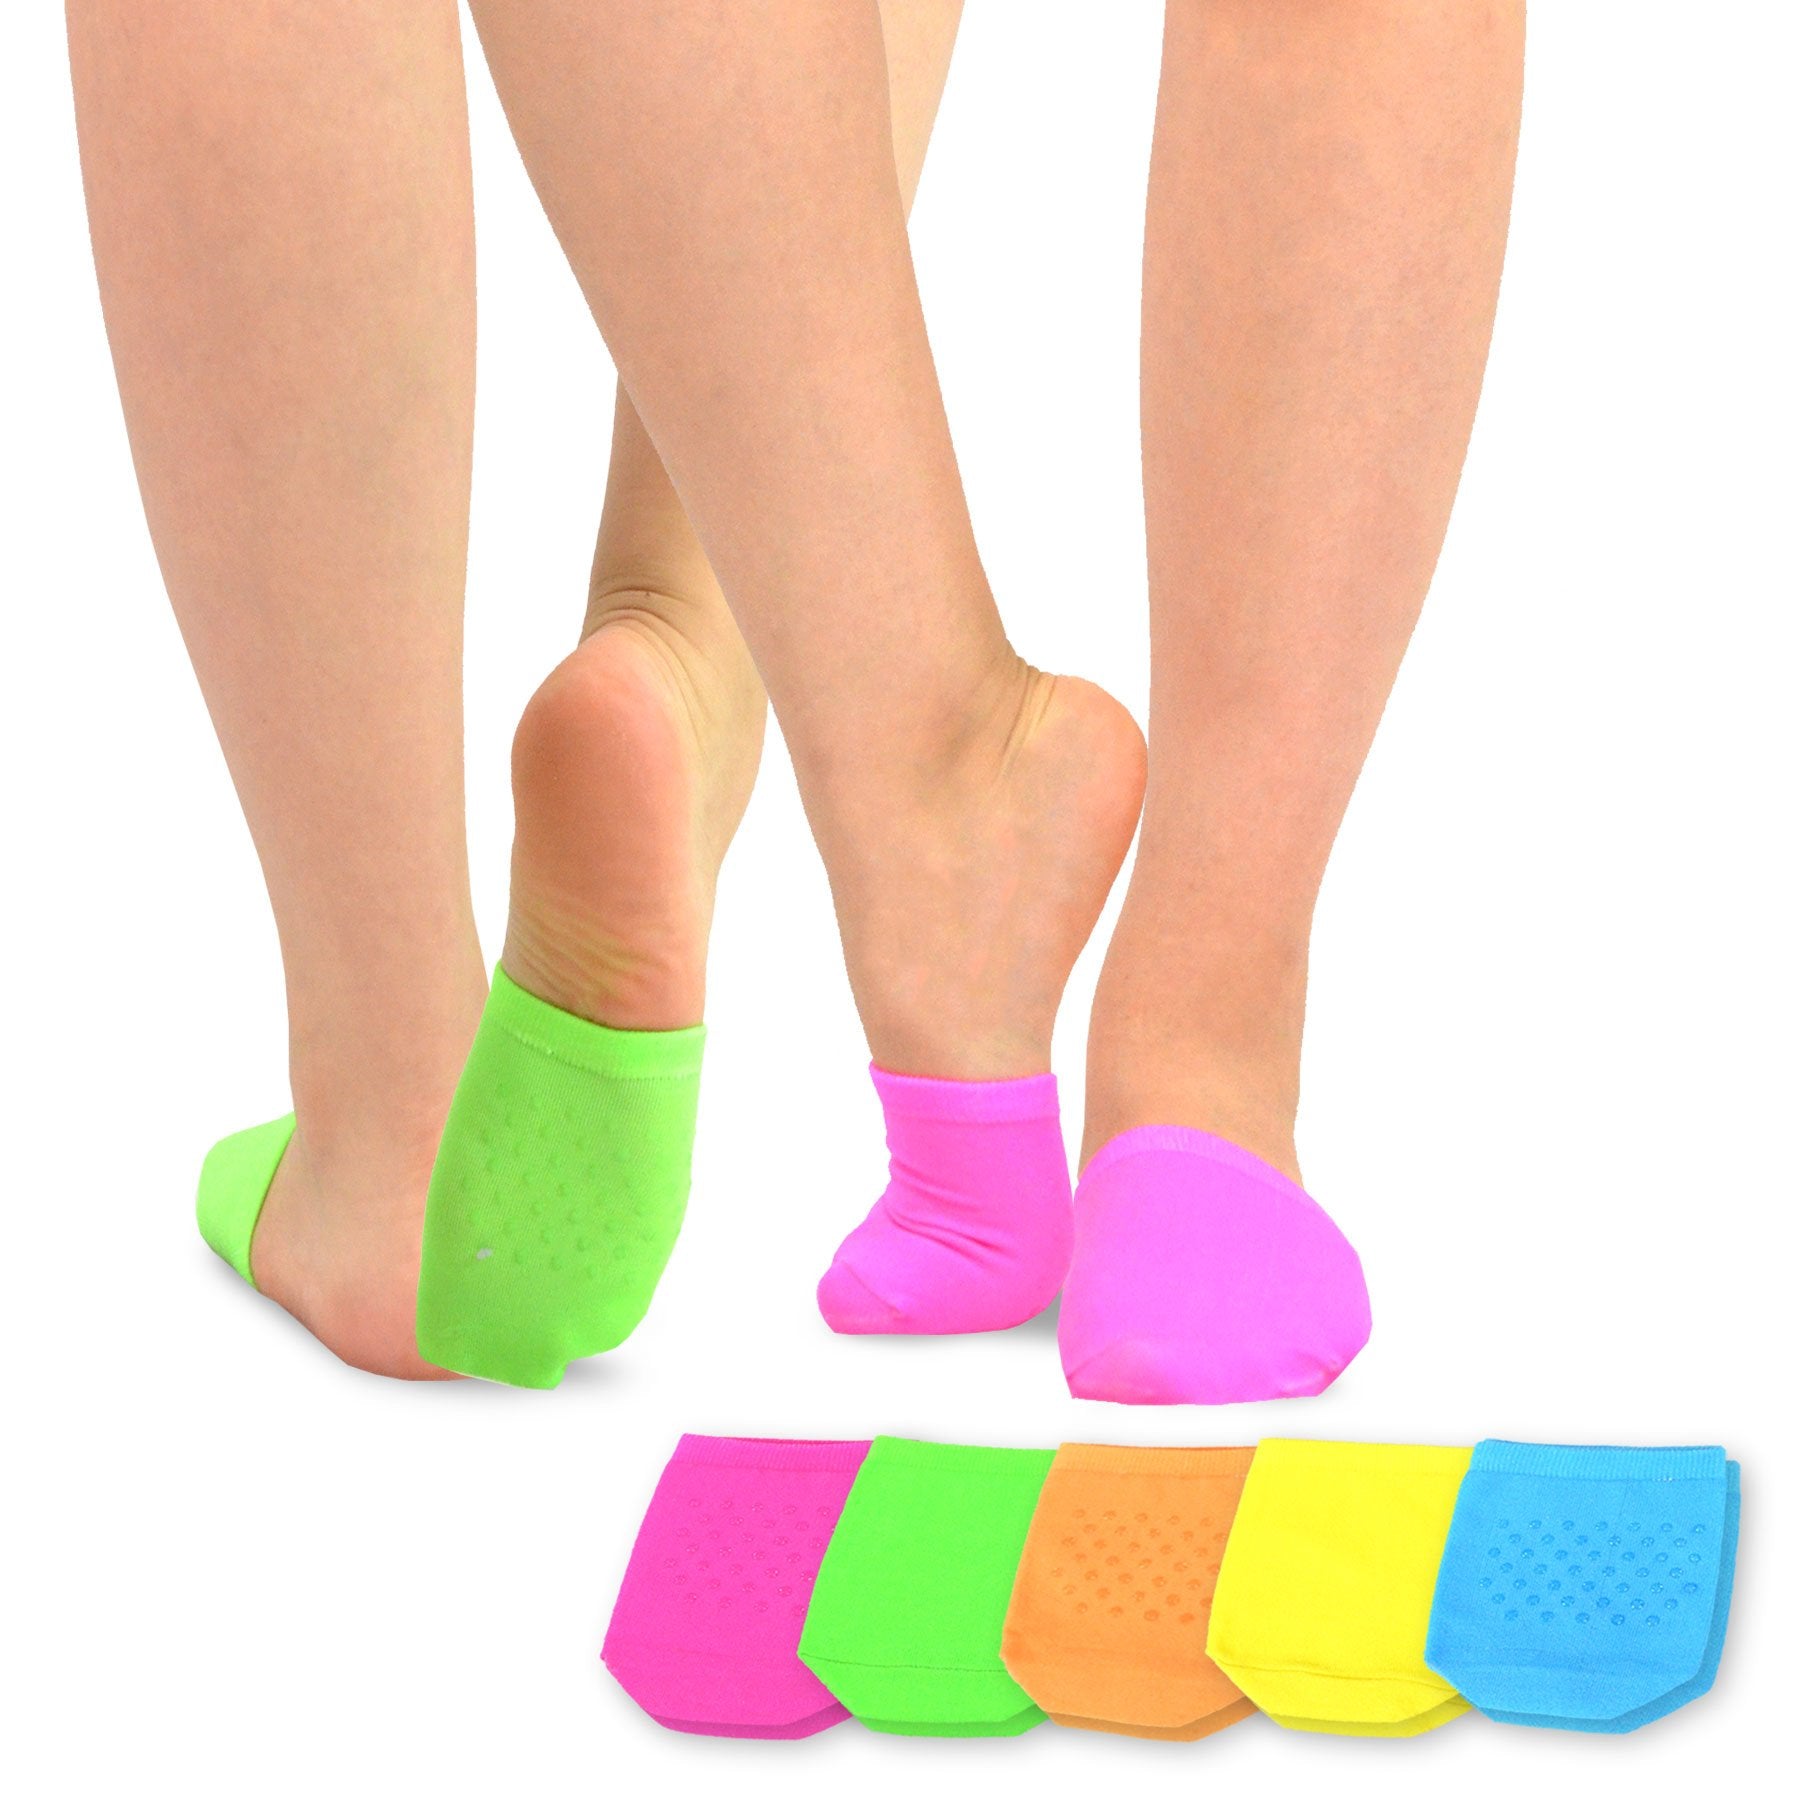 TRIUMPH HOSIERY Women's Toe Cover Socks Toe Topper Liner Half Socks, S 